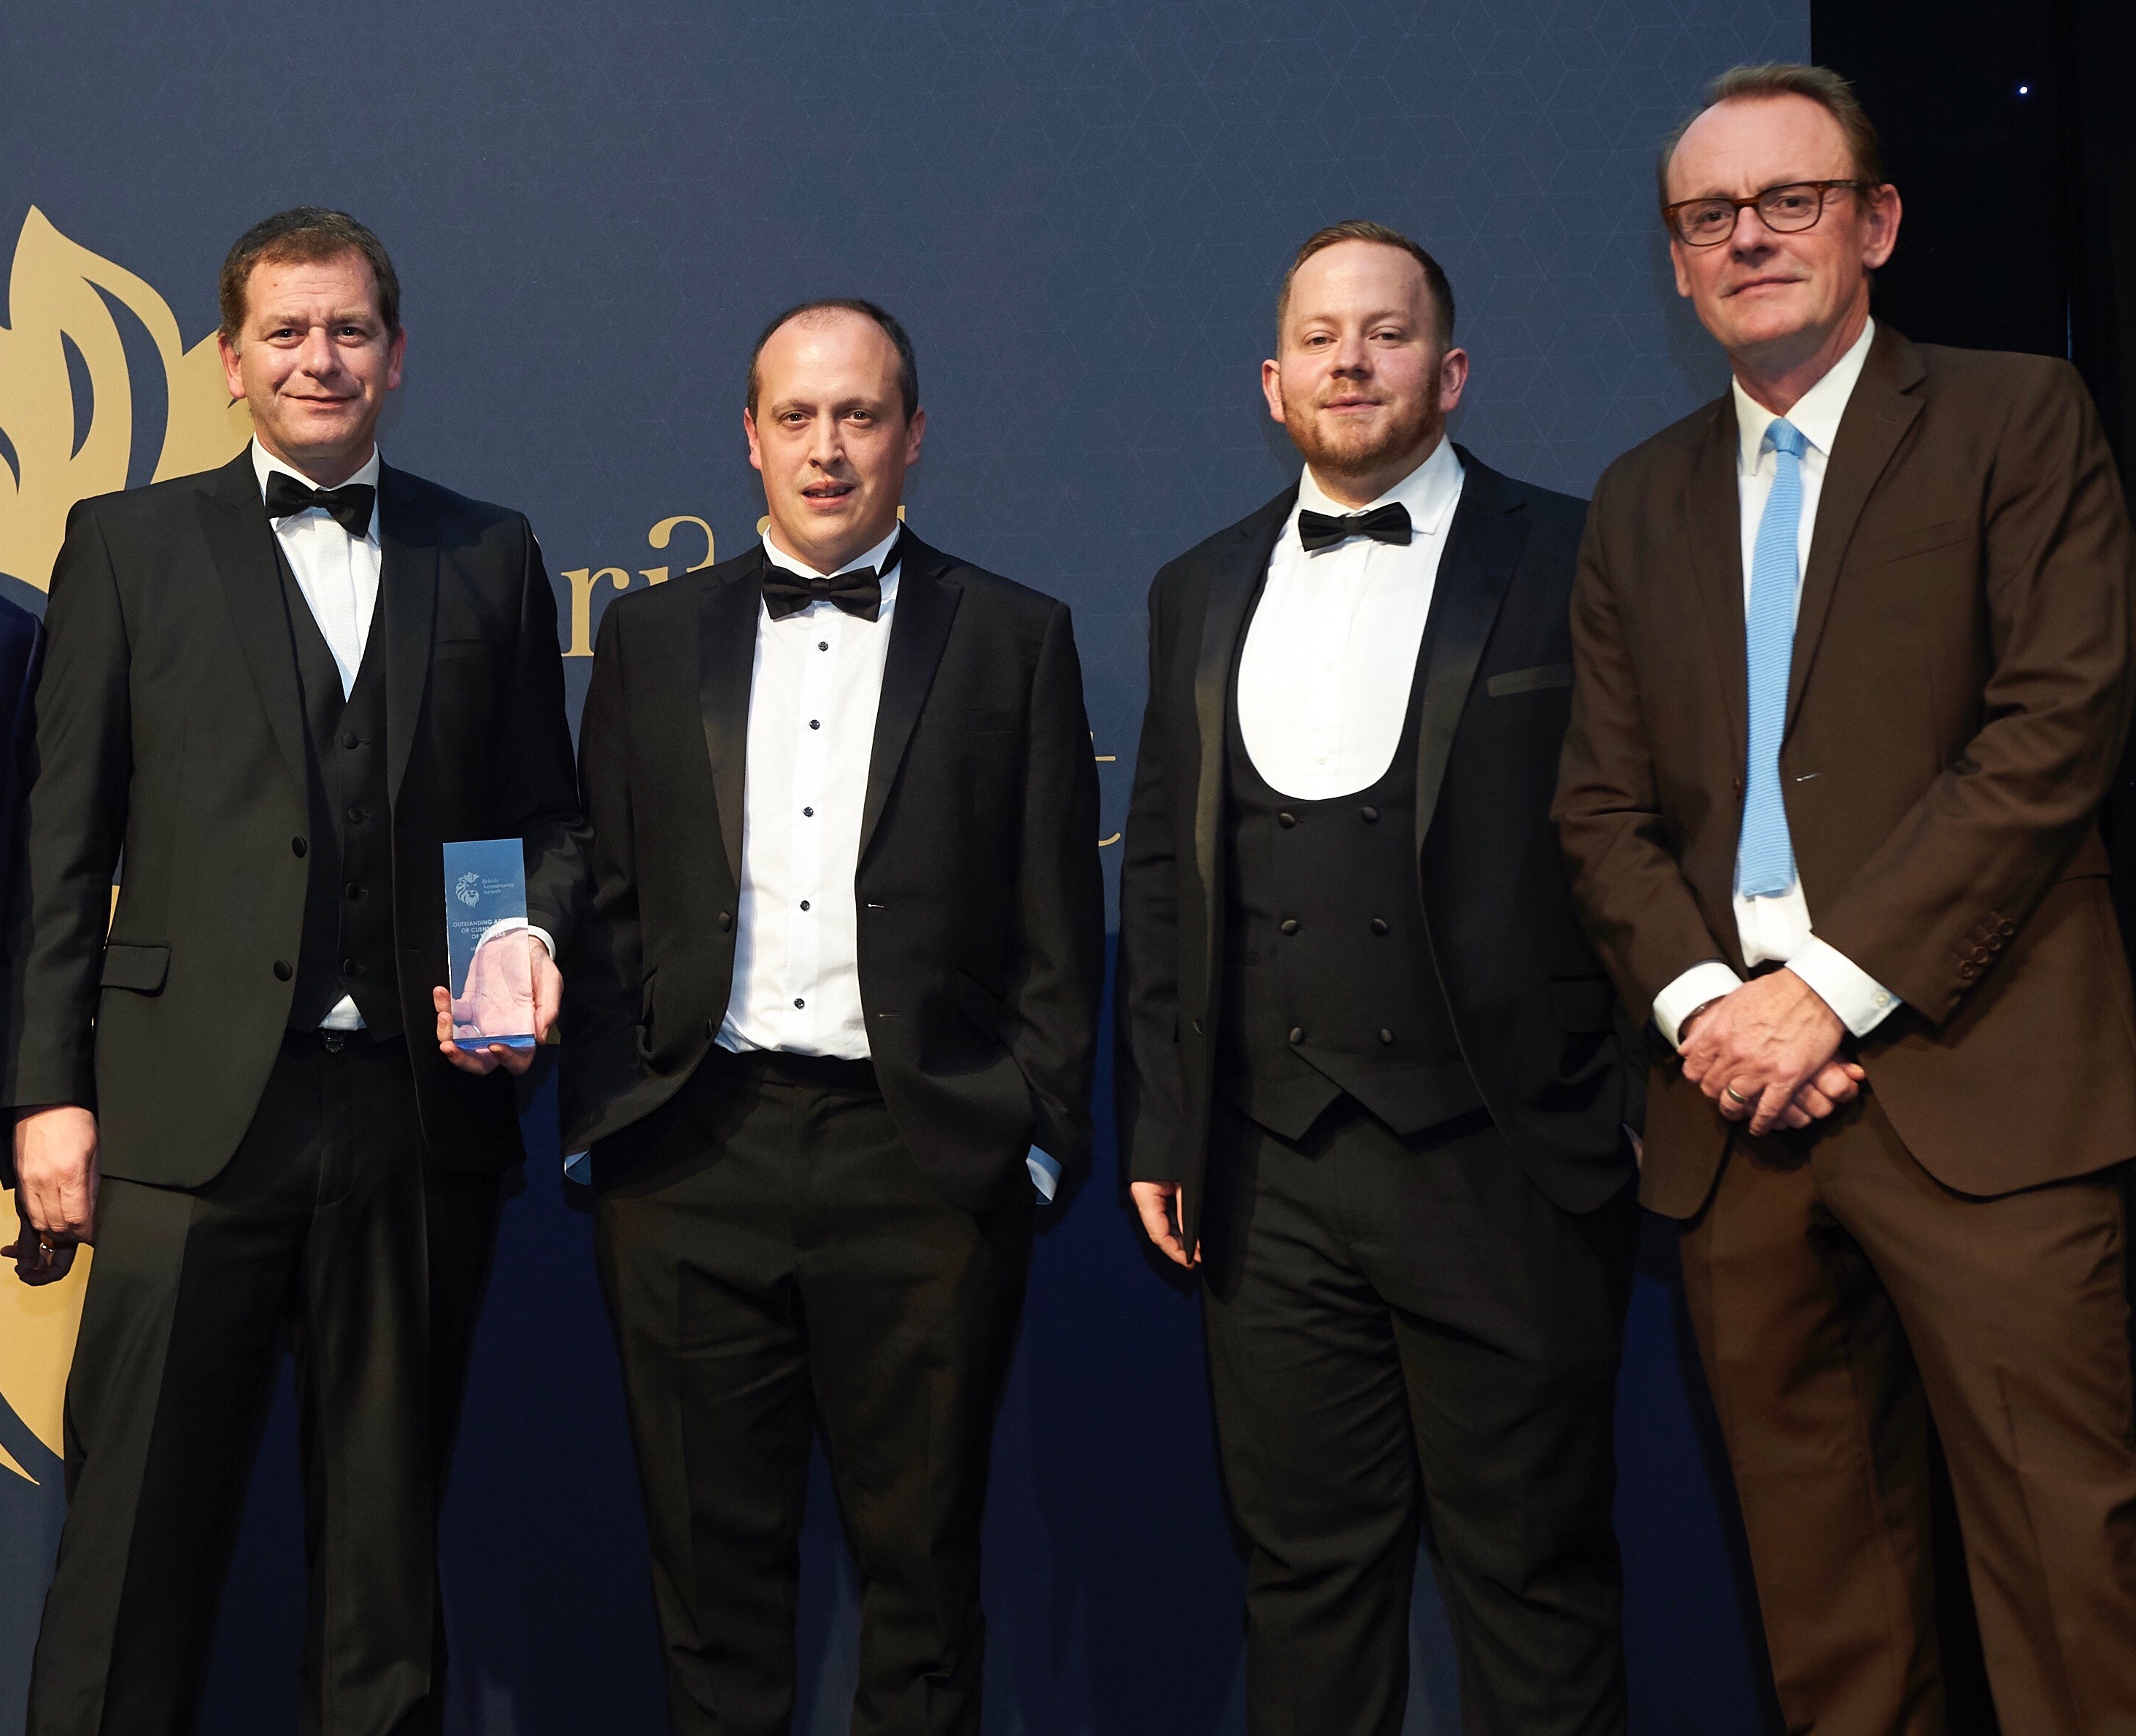 Infinity Partnership wins British Accountancy Award